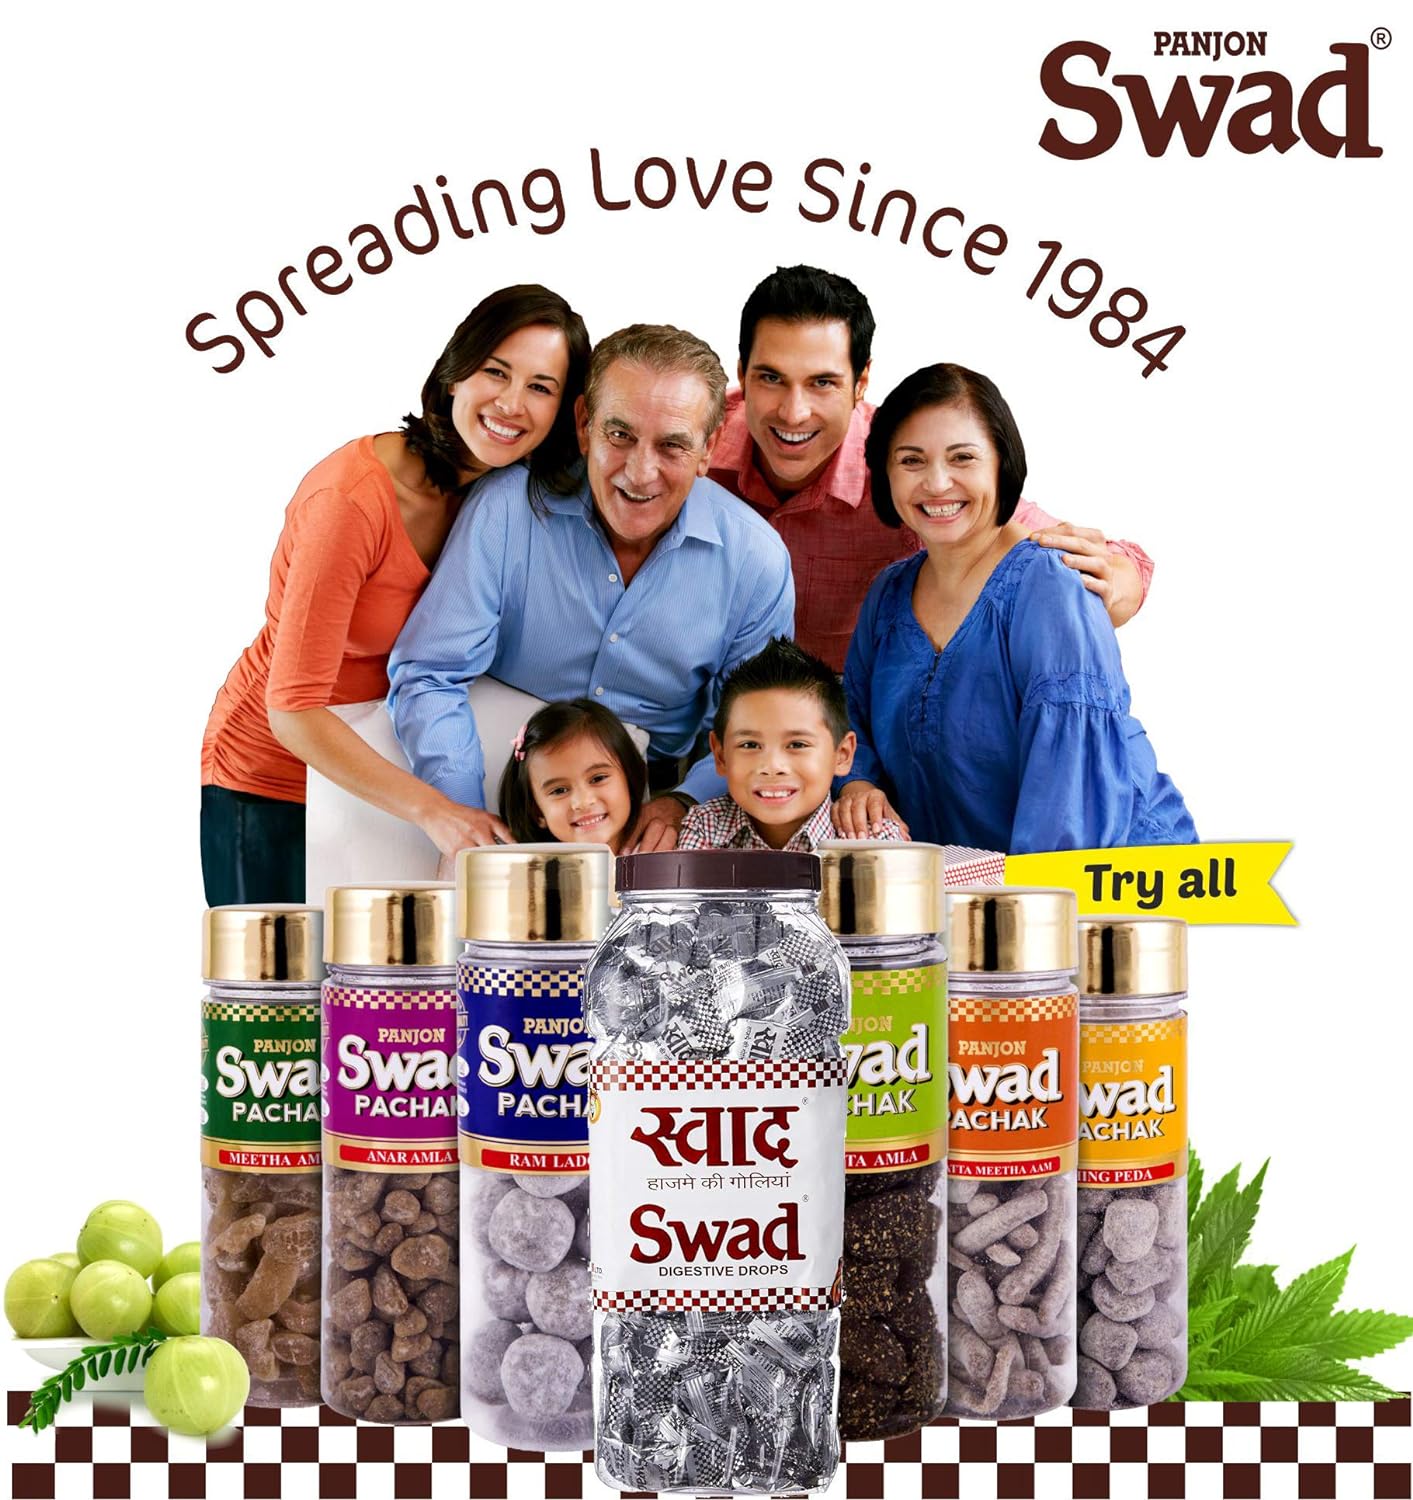 Swad Candy Gift Box (Imli & Meetha Pan Flavour) Gifts for Friends, Boyfriend, Girlfriend, 125 Toffee x 2 Box